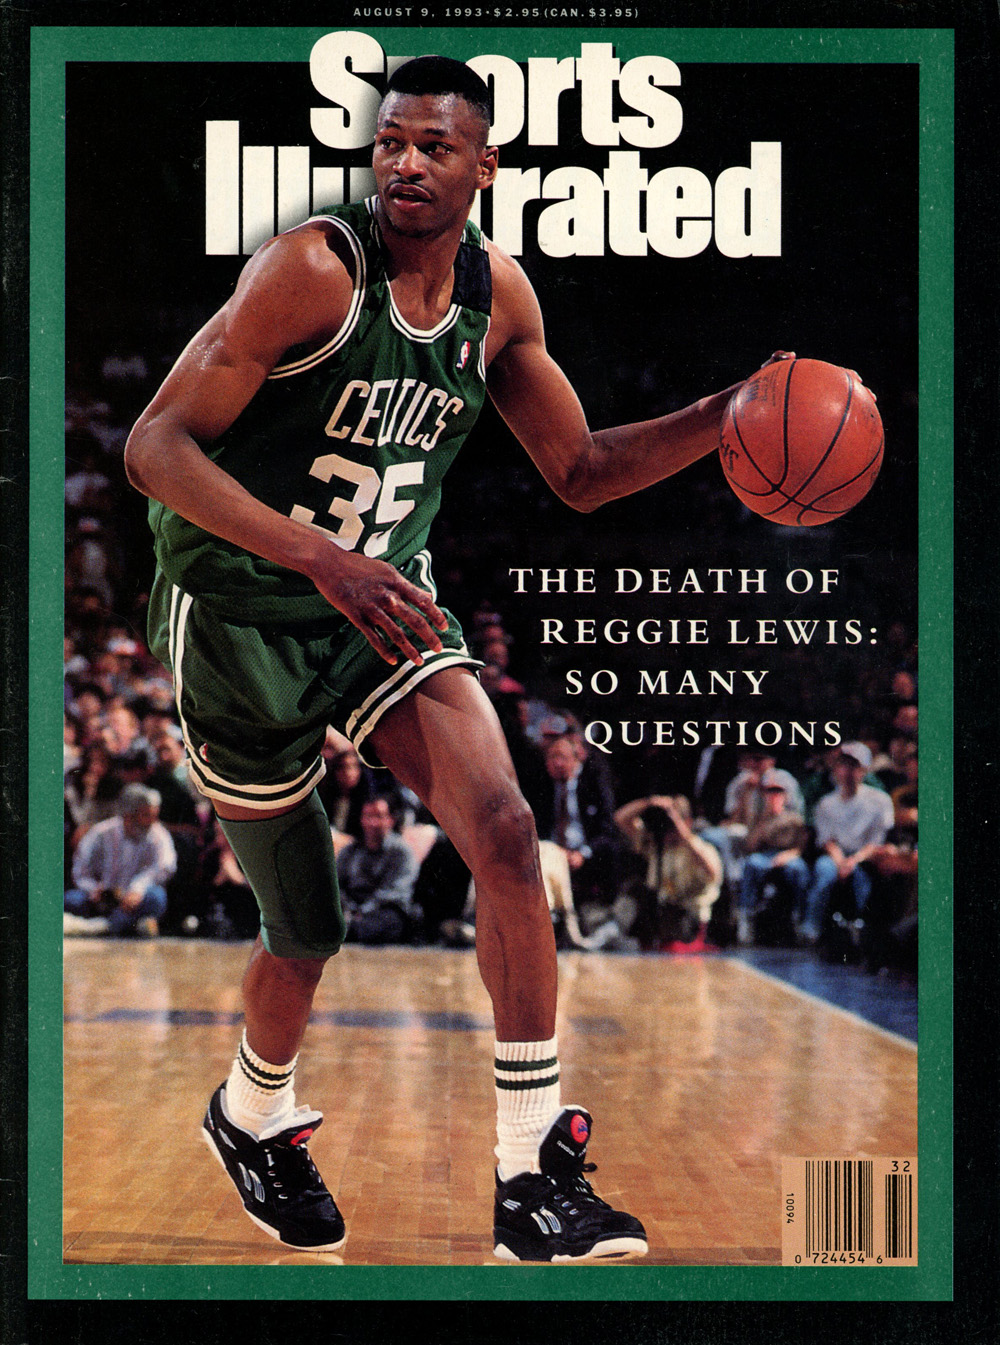 Reggie Lewis Unsigned Celtics Sports Illustrated Aug 9 1993 No Label